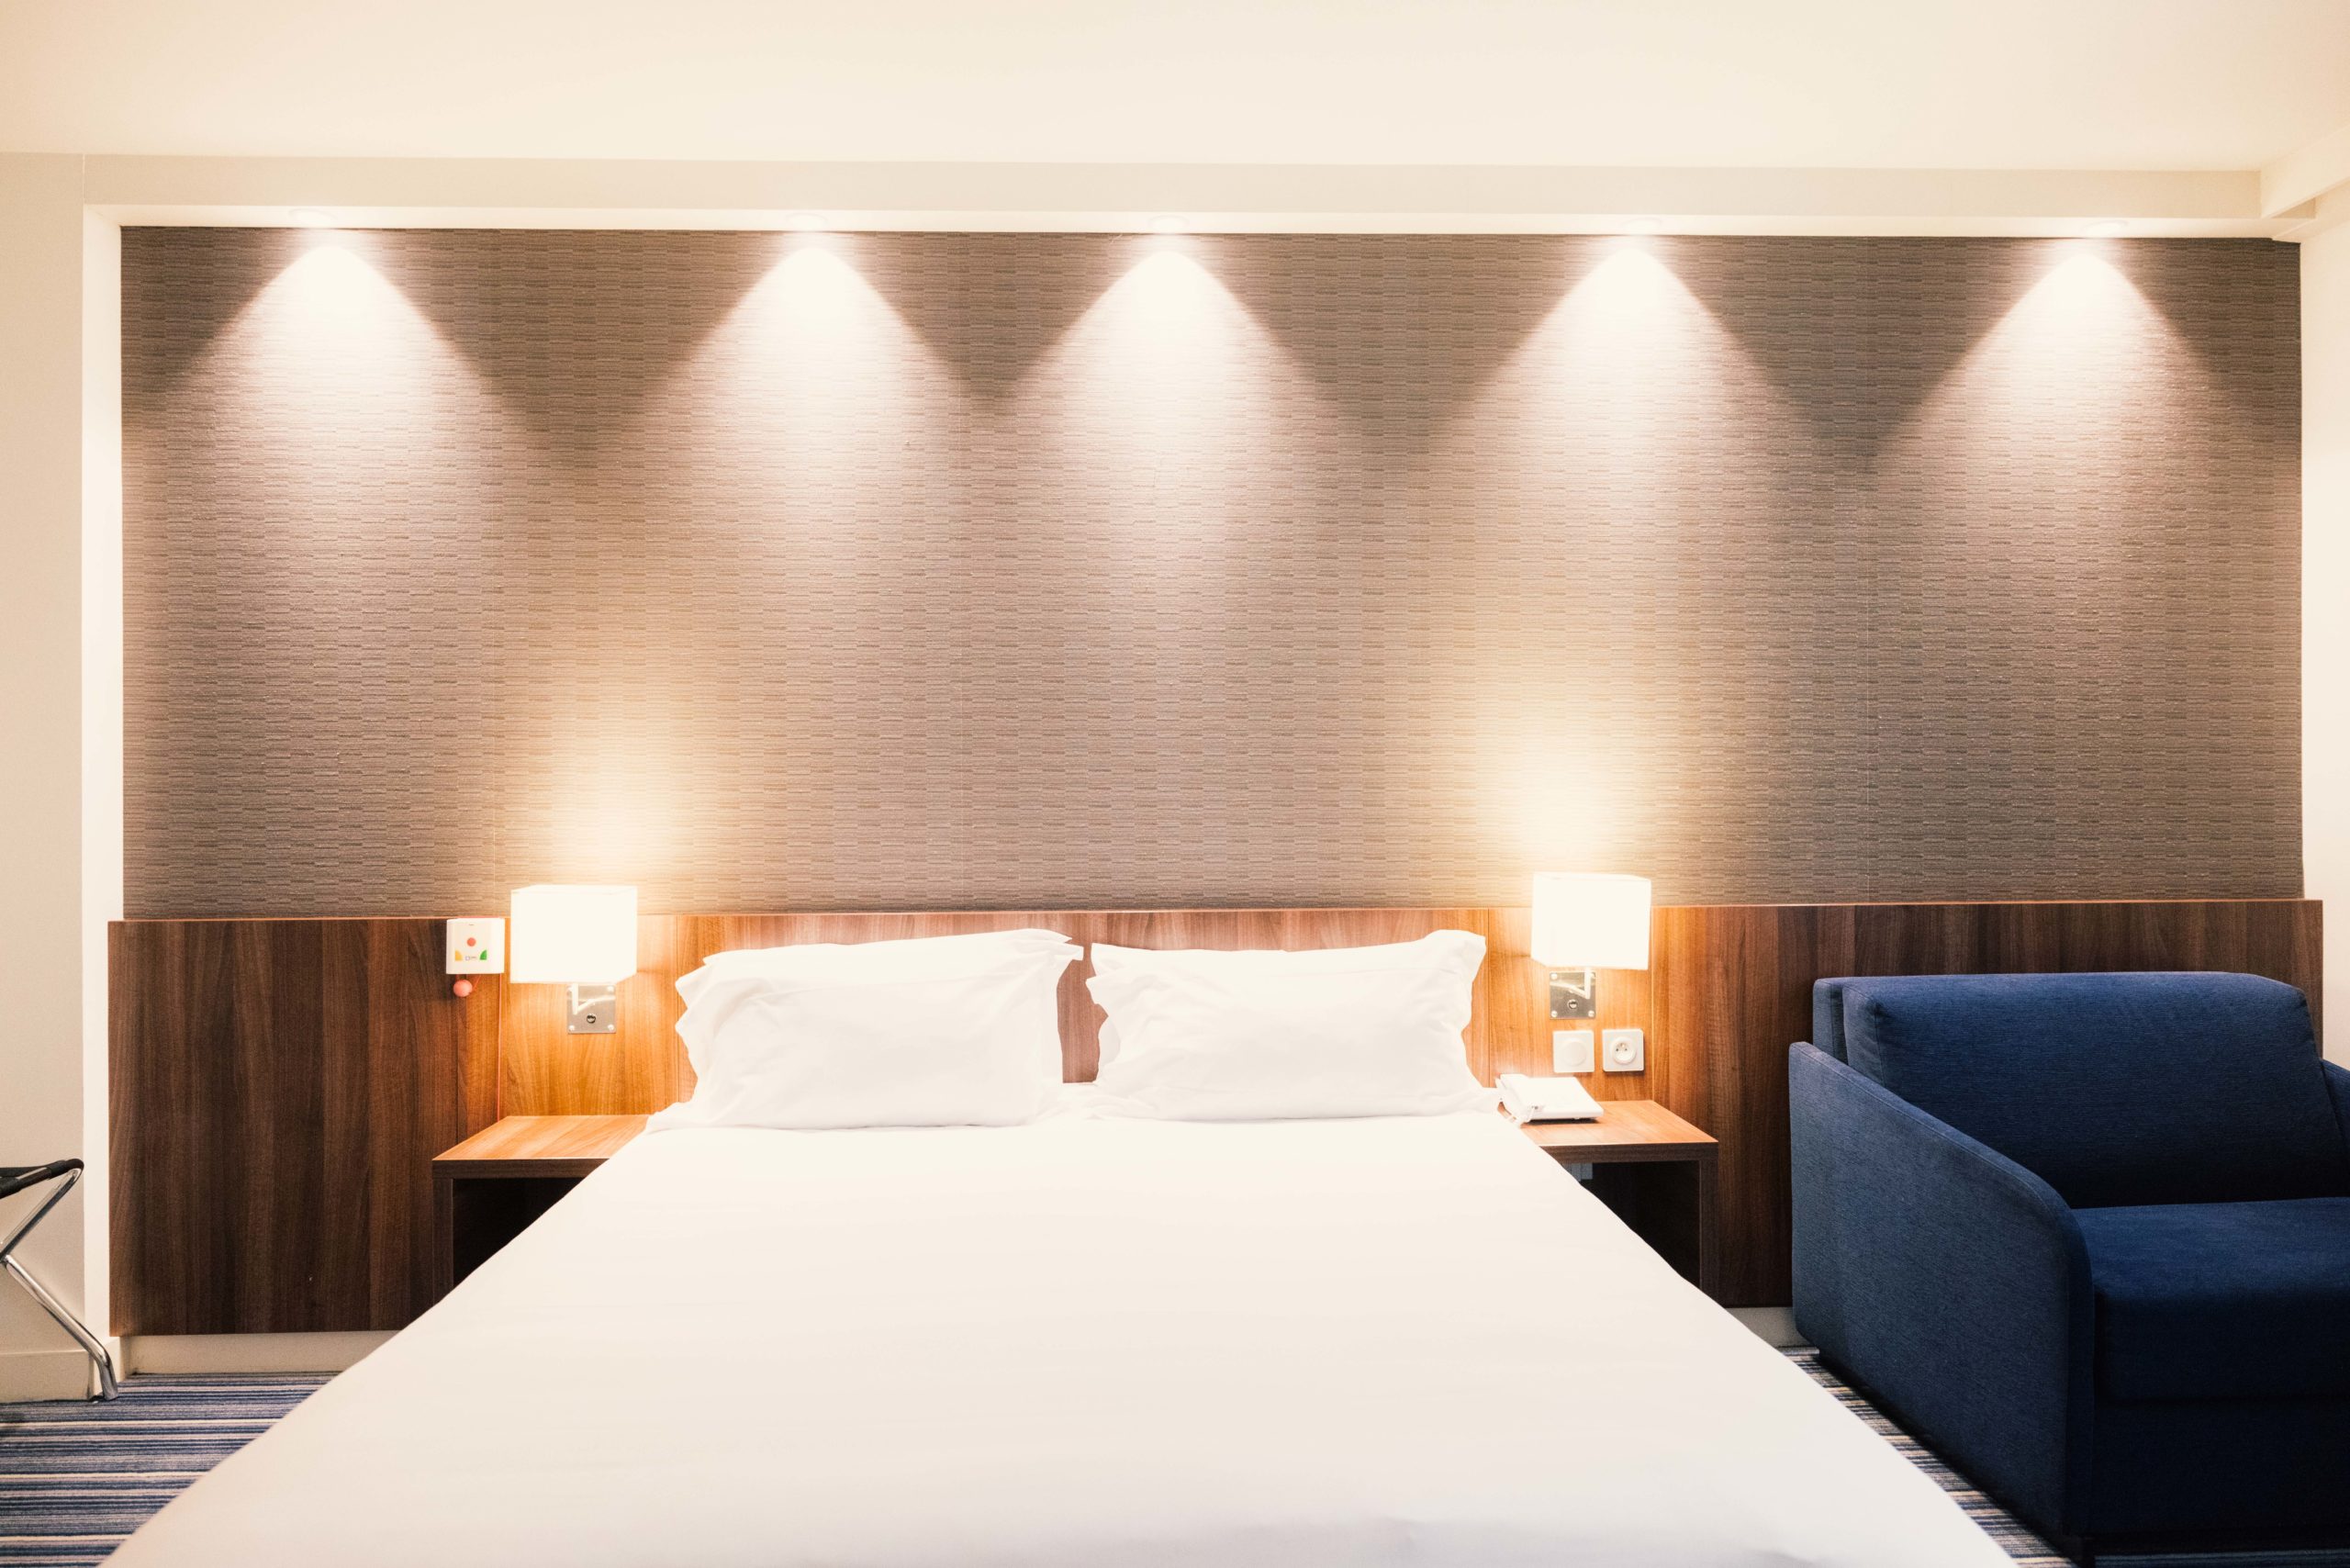 Chambre Double Standard - Holiday Inn Express Lille - Plan rapproché